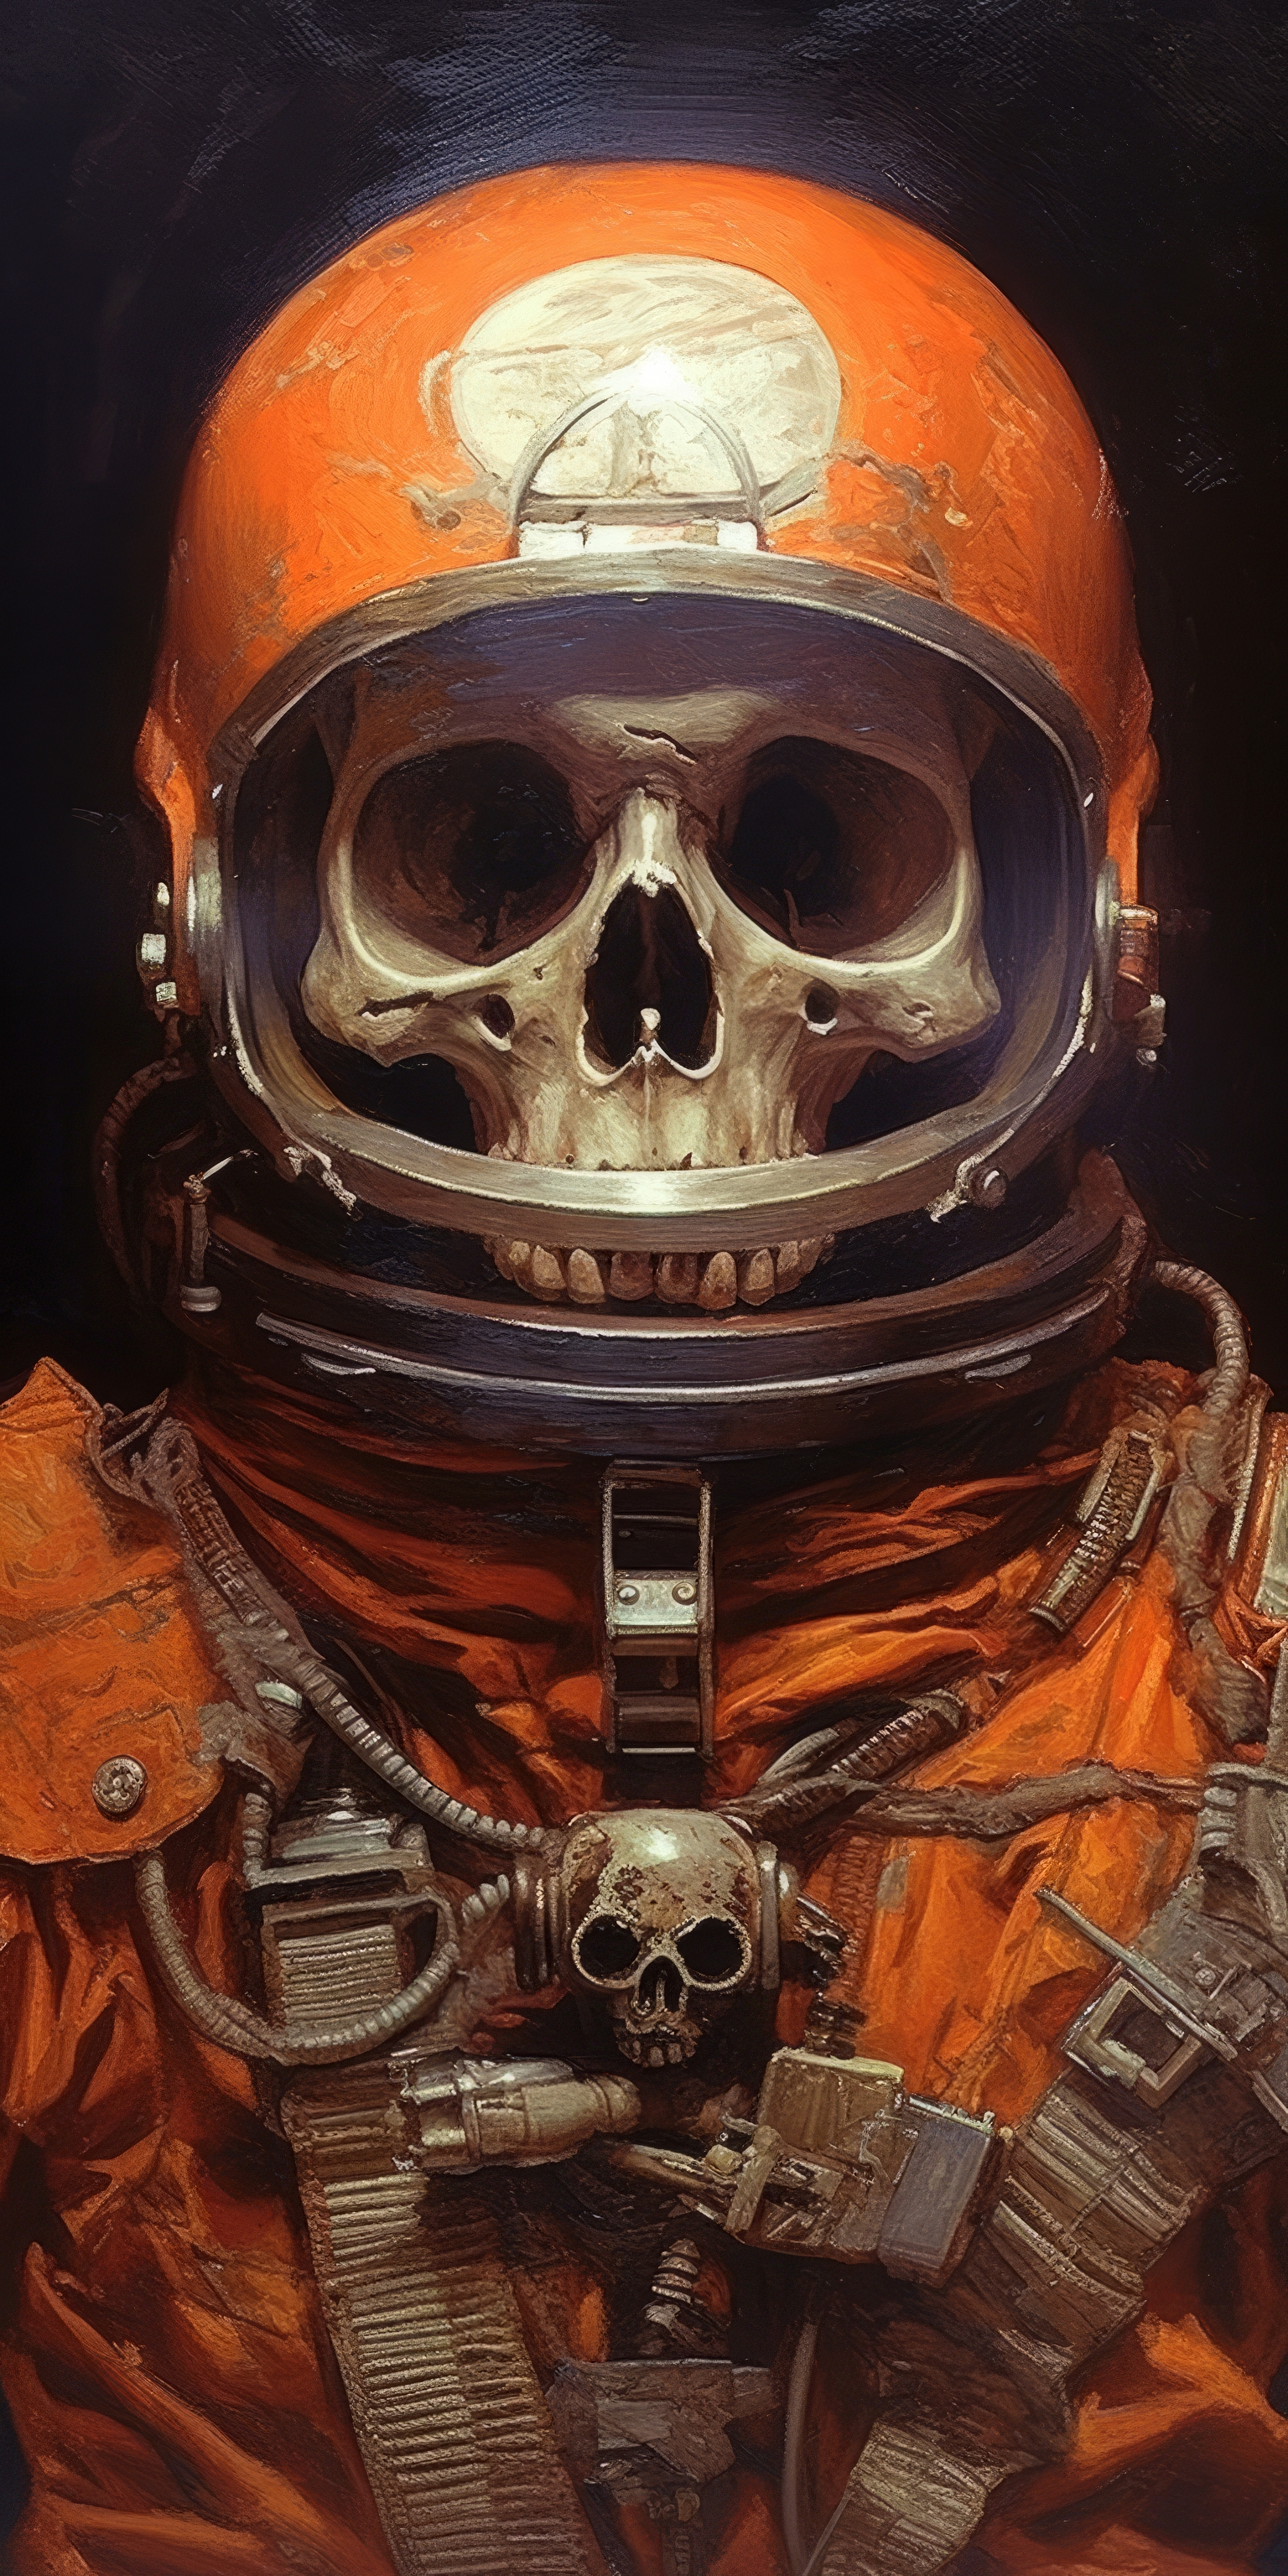 General 1536x3072 AI art portrait display illustration skull orange astronaut dead helmet spacesuit